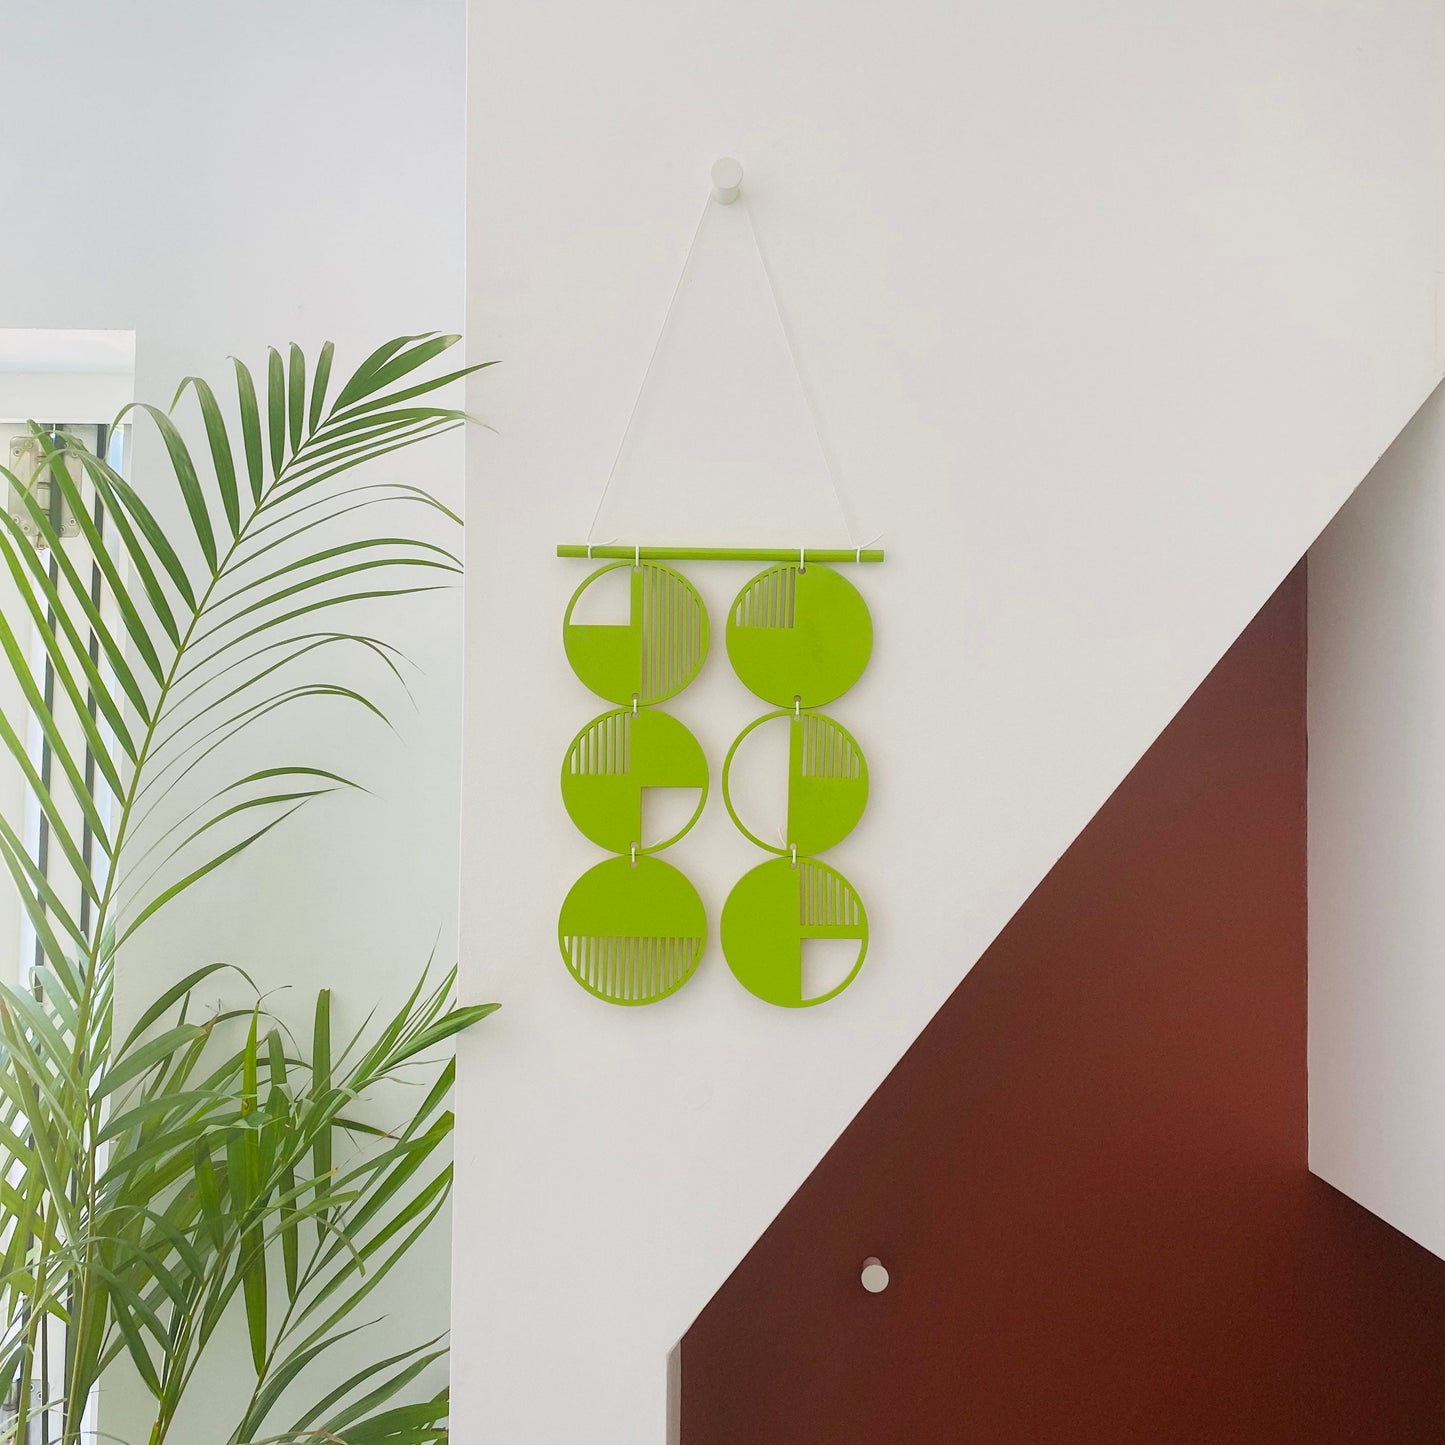 Lime Green Wall hanging - Geometric Art - Plywood Decor - Monochrome Art - Bright Wall Hanging - Wall Art Decor - Green Cut Out Art